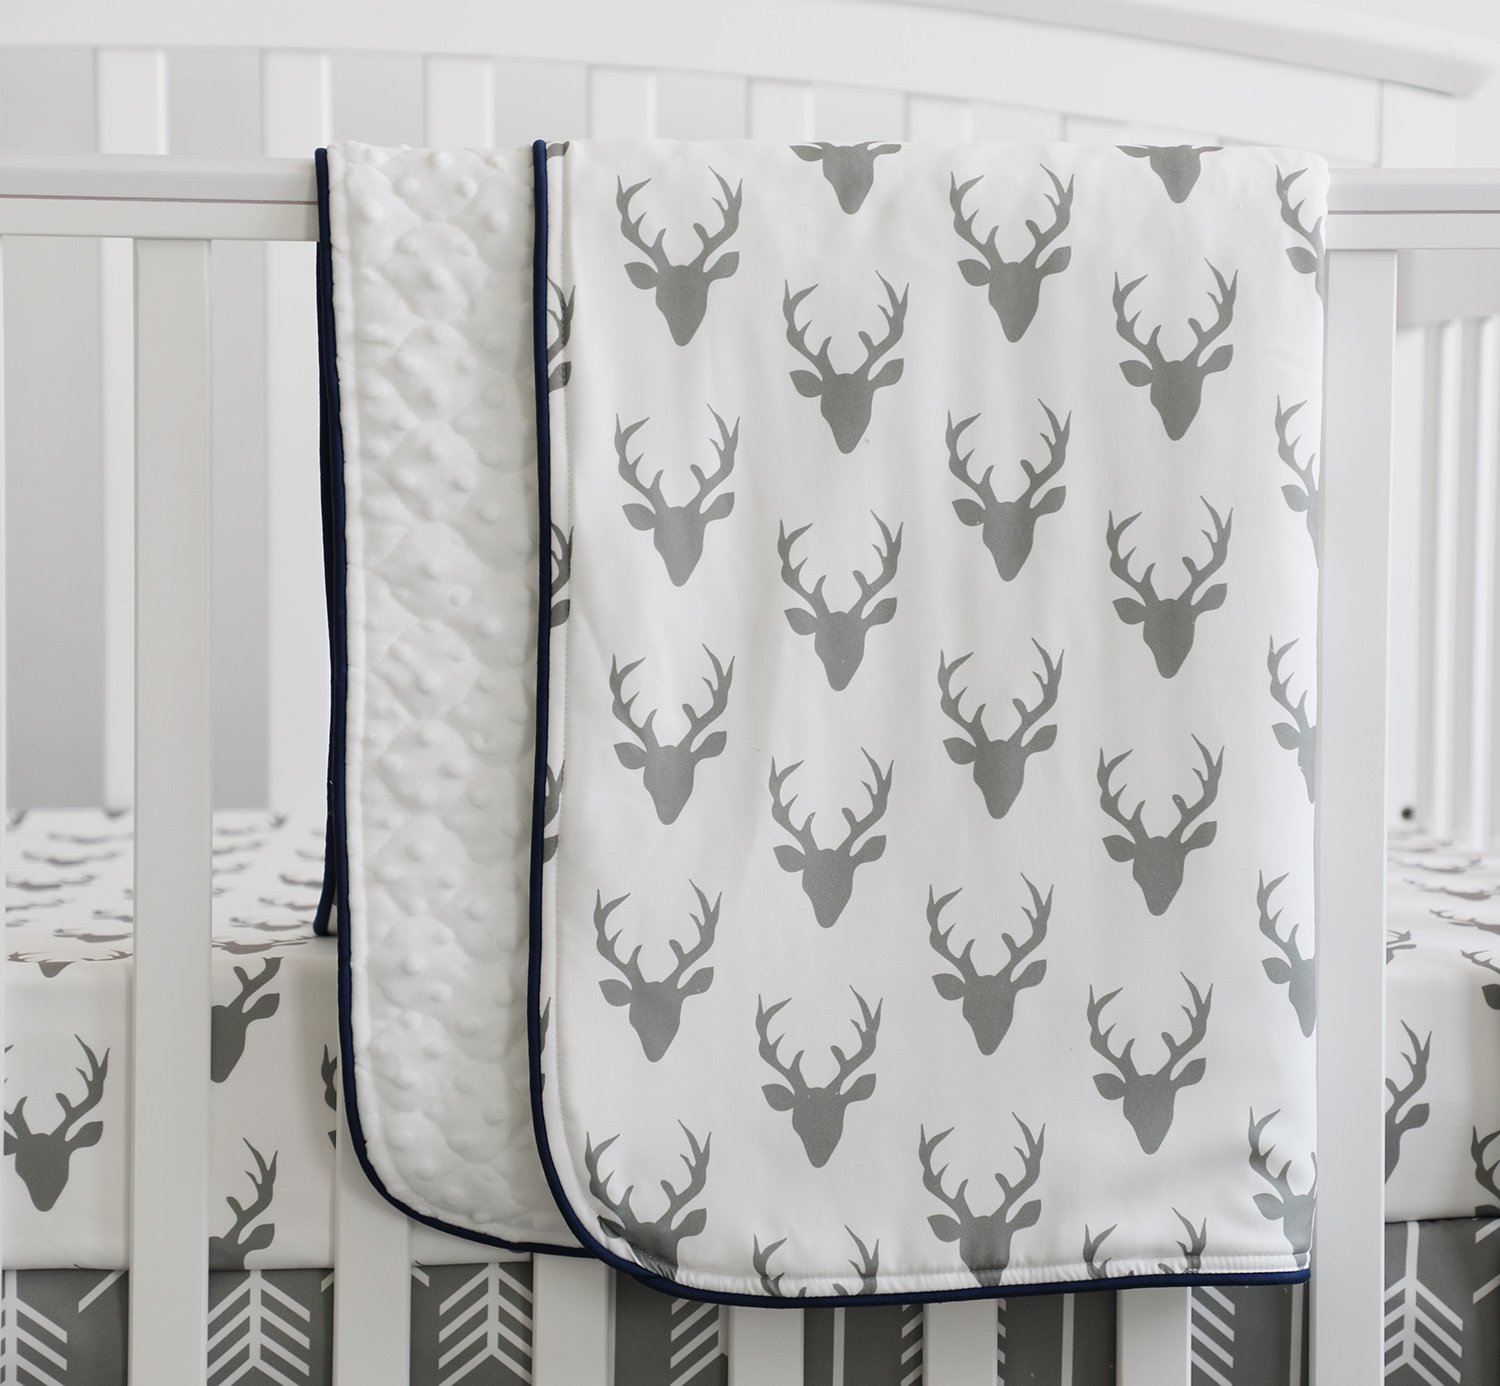 Baby Boy Crib Bedding White Grey Woodland Arrow Antlers Deer Head Minky Blanket Navy Crib Sheet Deer Buck Crib Rail Bedding Set (Grey Arrow Deer Head, 3 Pieces Set)